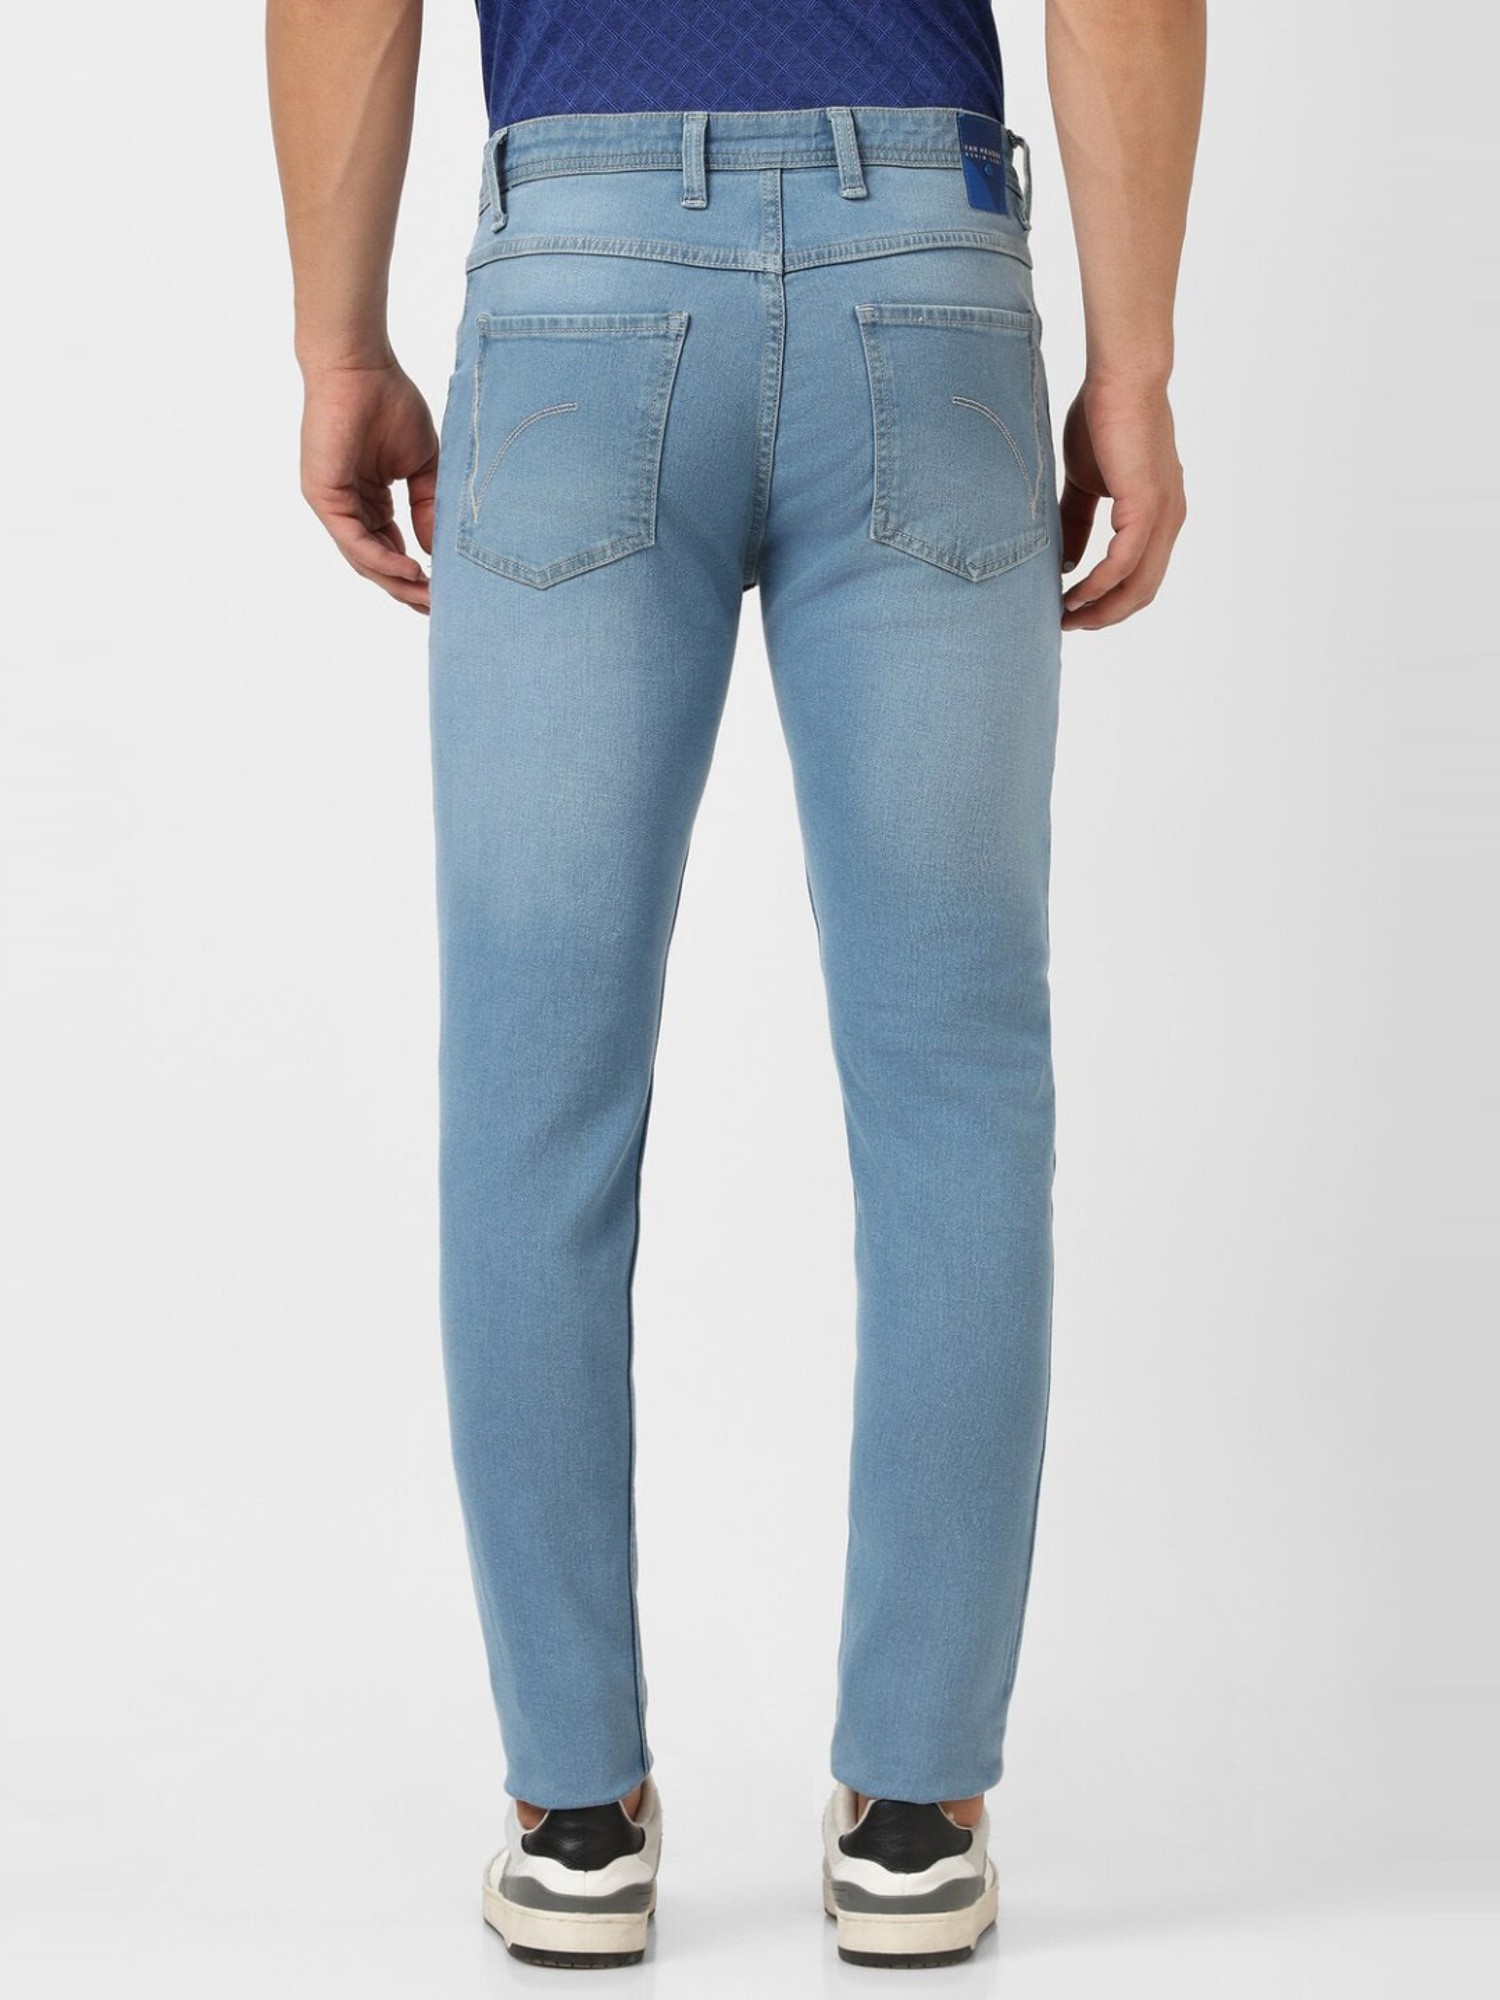 Bare Denim Men Mid Rise Straight Blue Jeans - Selling Fast at Pantaloons.com